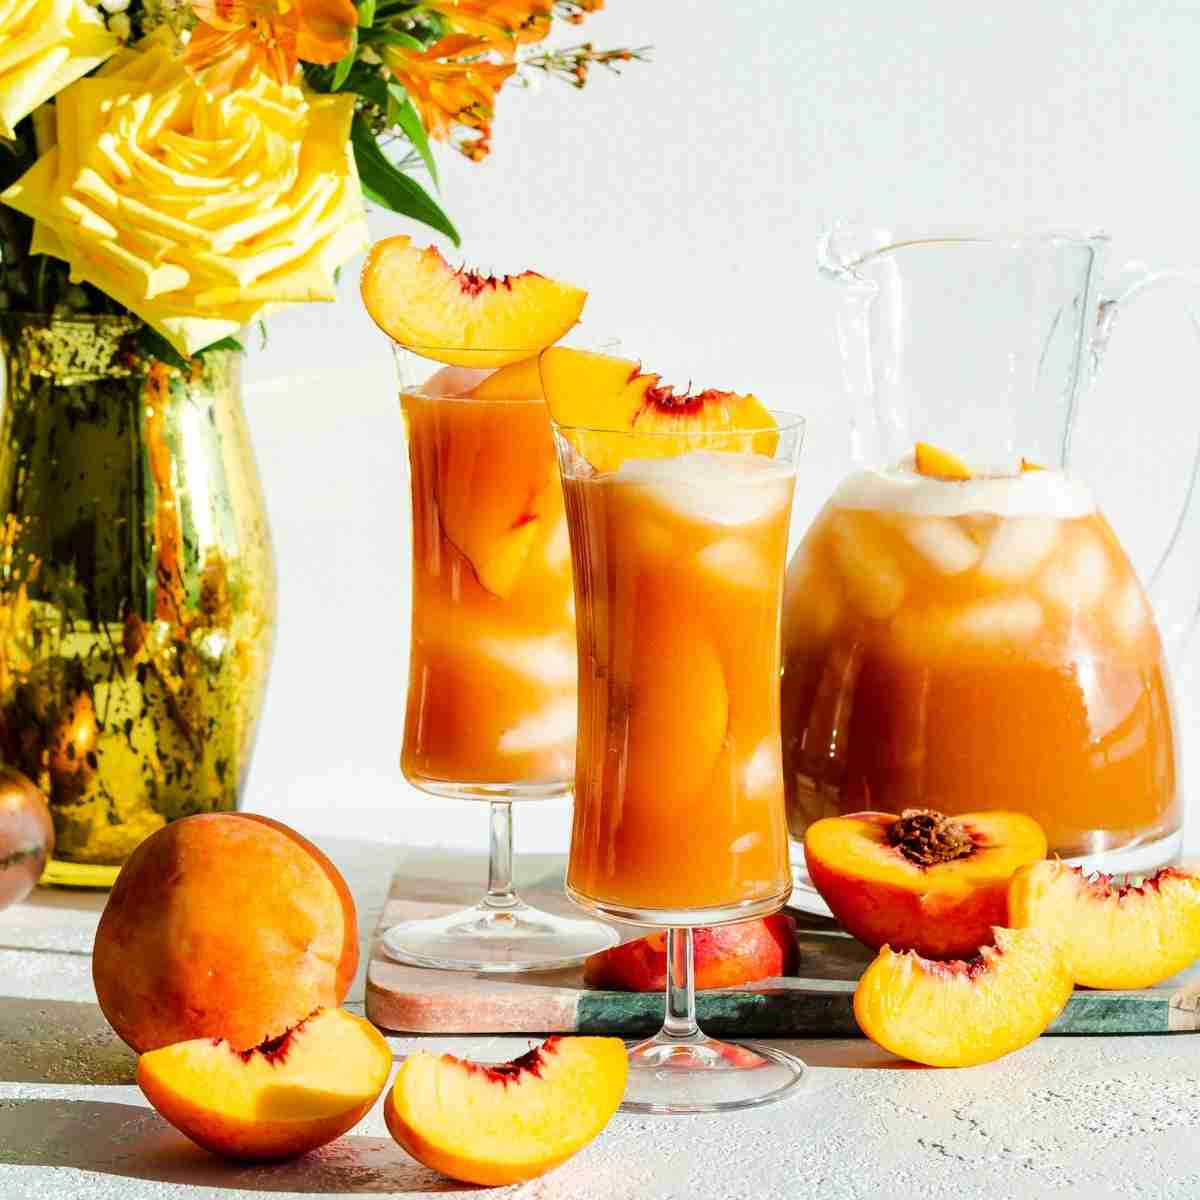 https://www.spoonabilities.com/wp-content/uploads/2021/06/Bourbon-Peach-Iced-Tea-Featured-Image.jpg